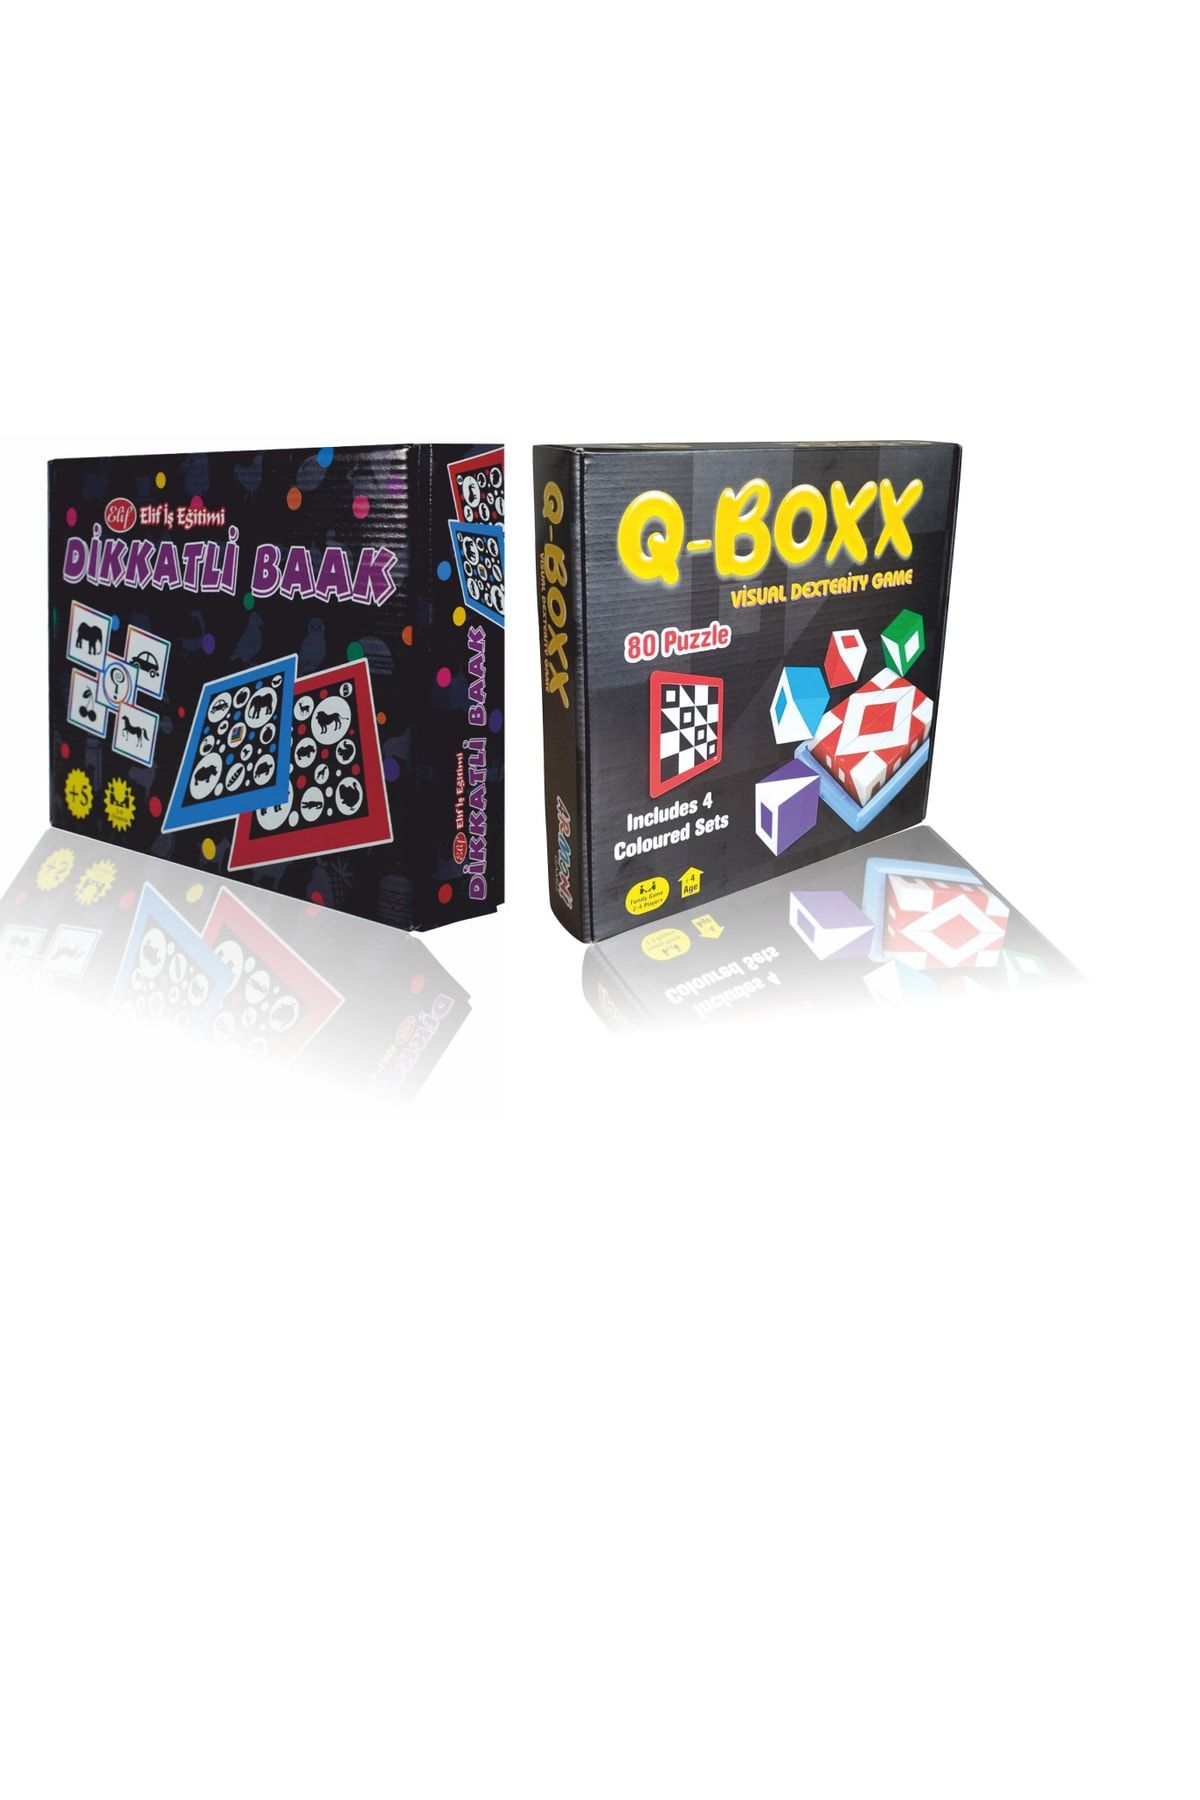 ELUX Dikkatli Baak ( Look Look ) Ve Q-boxx Cubes ( Q-bitz, Qbitz ) 2si Bir Arada